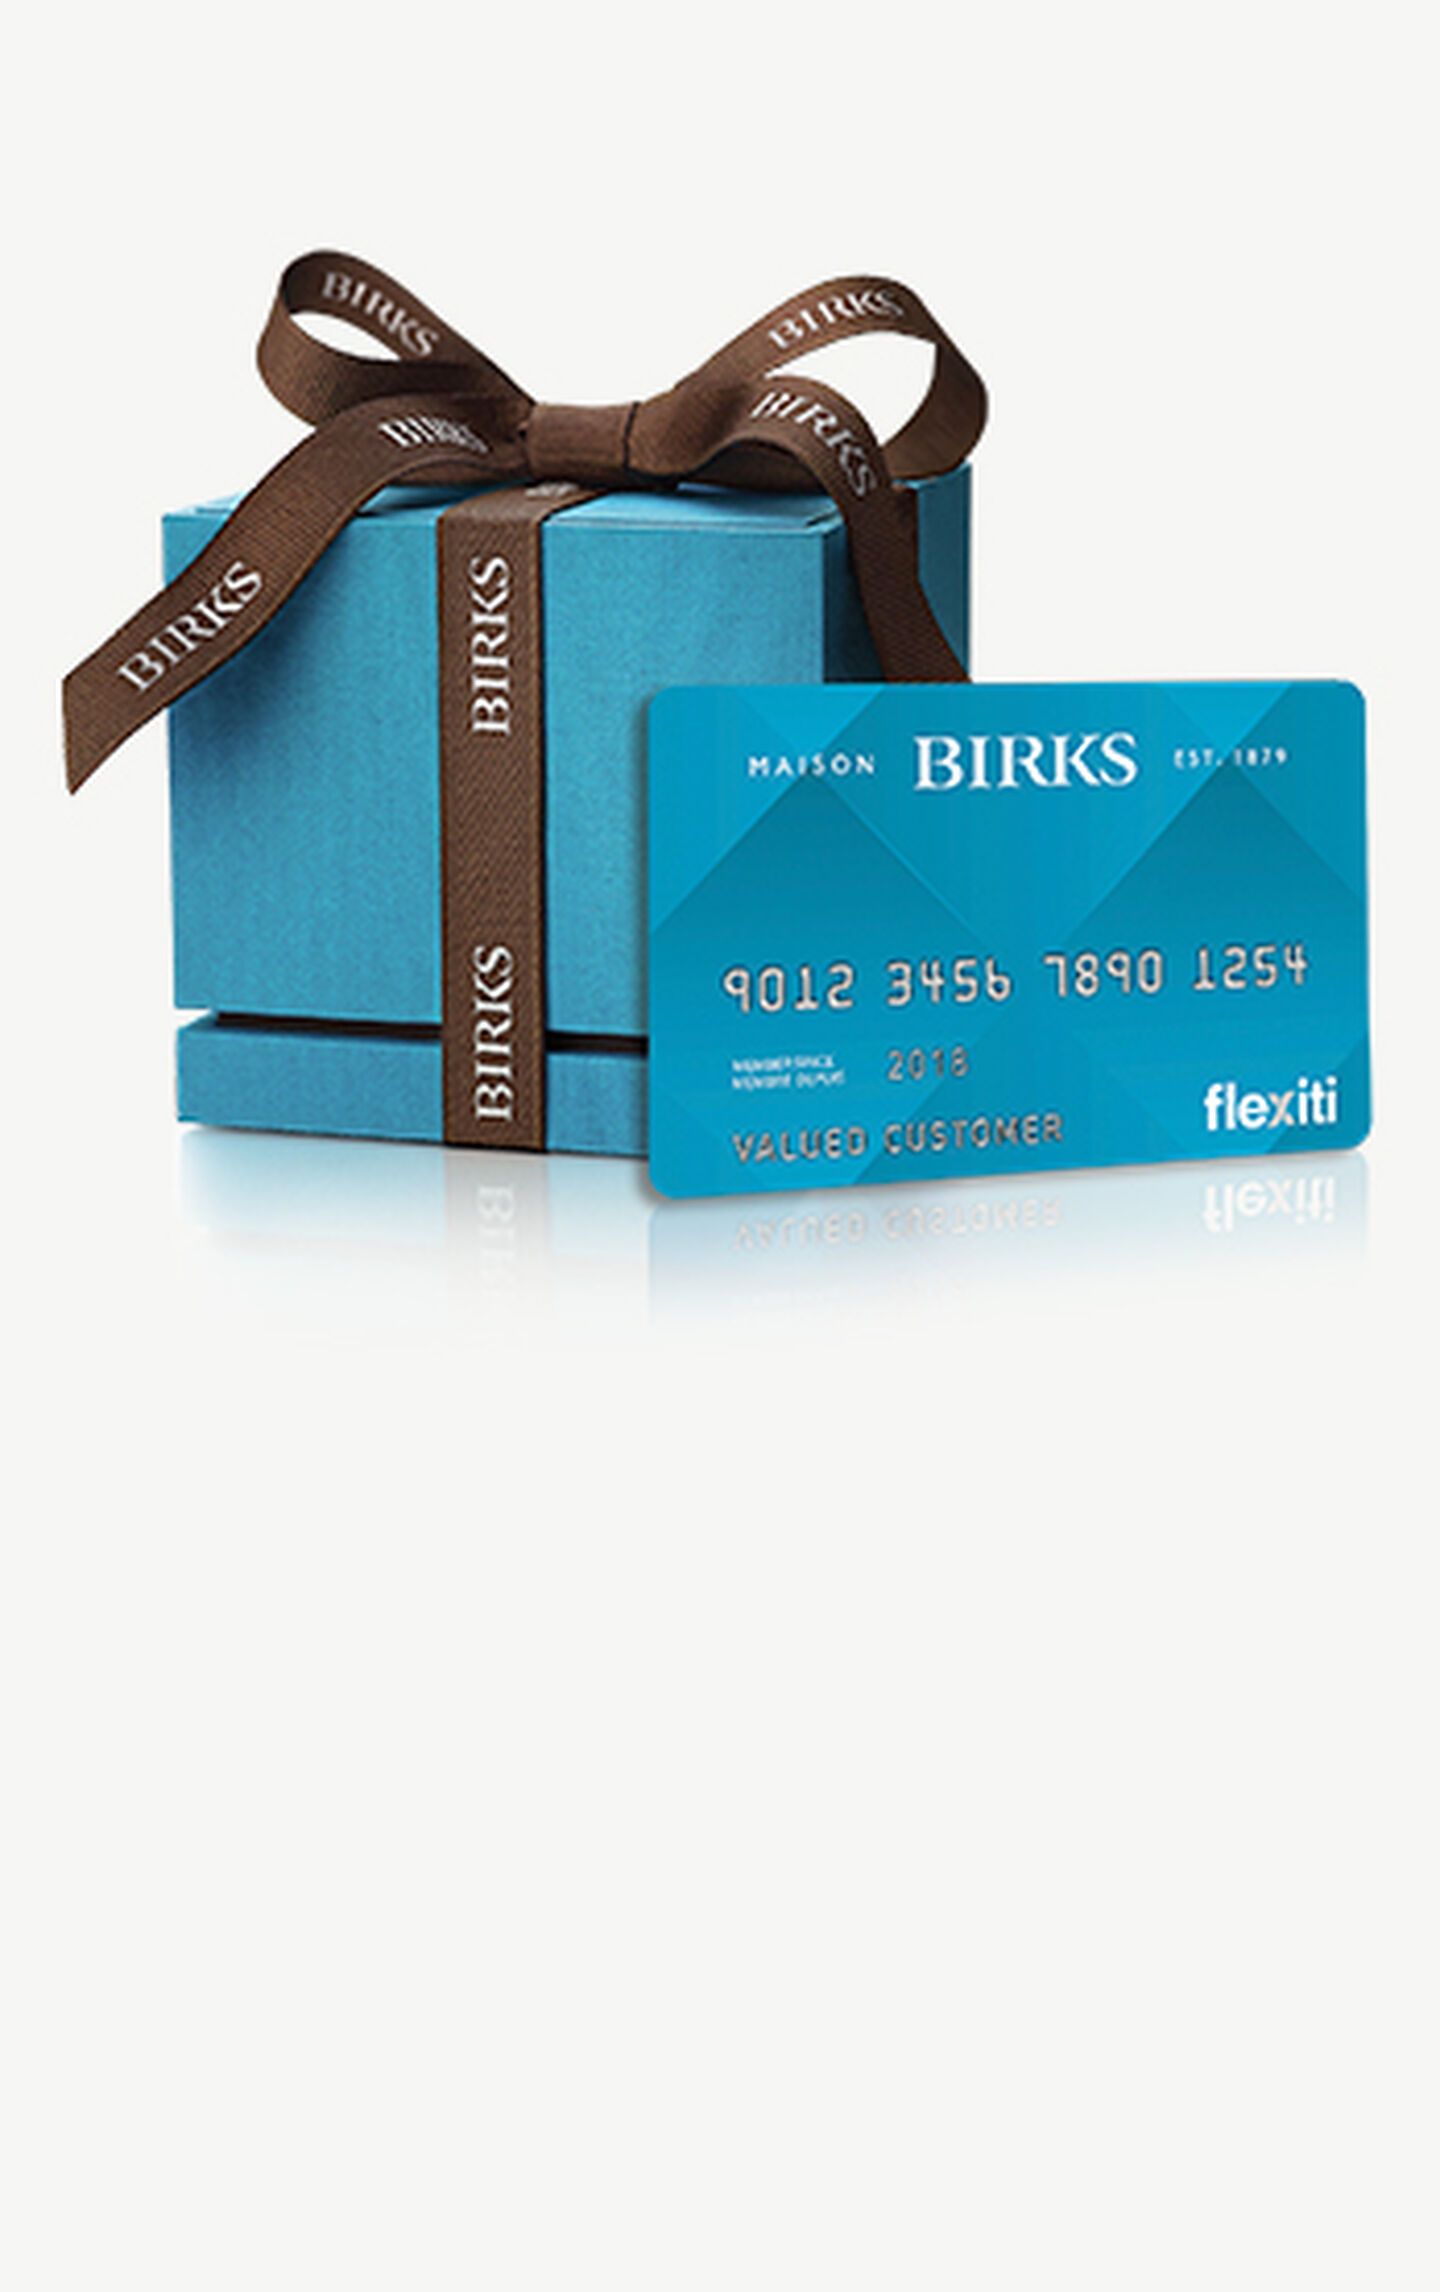 Birks Blue Box and Flexiti Credit Card